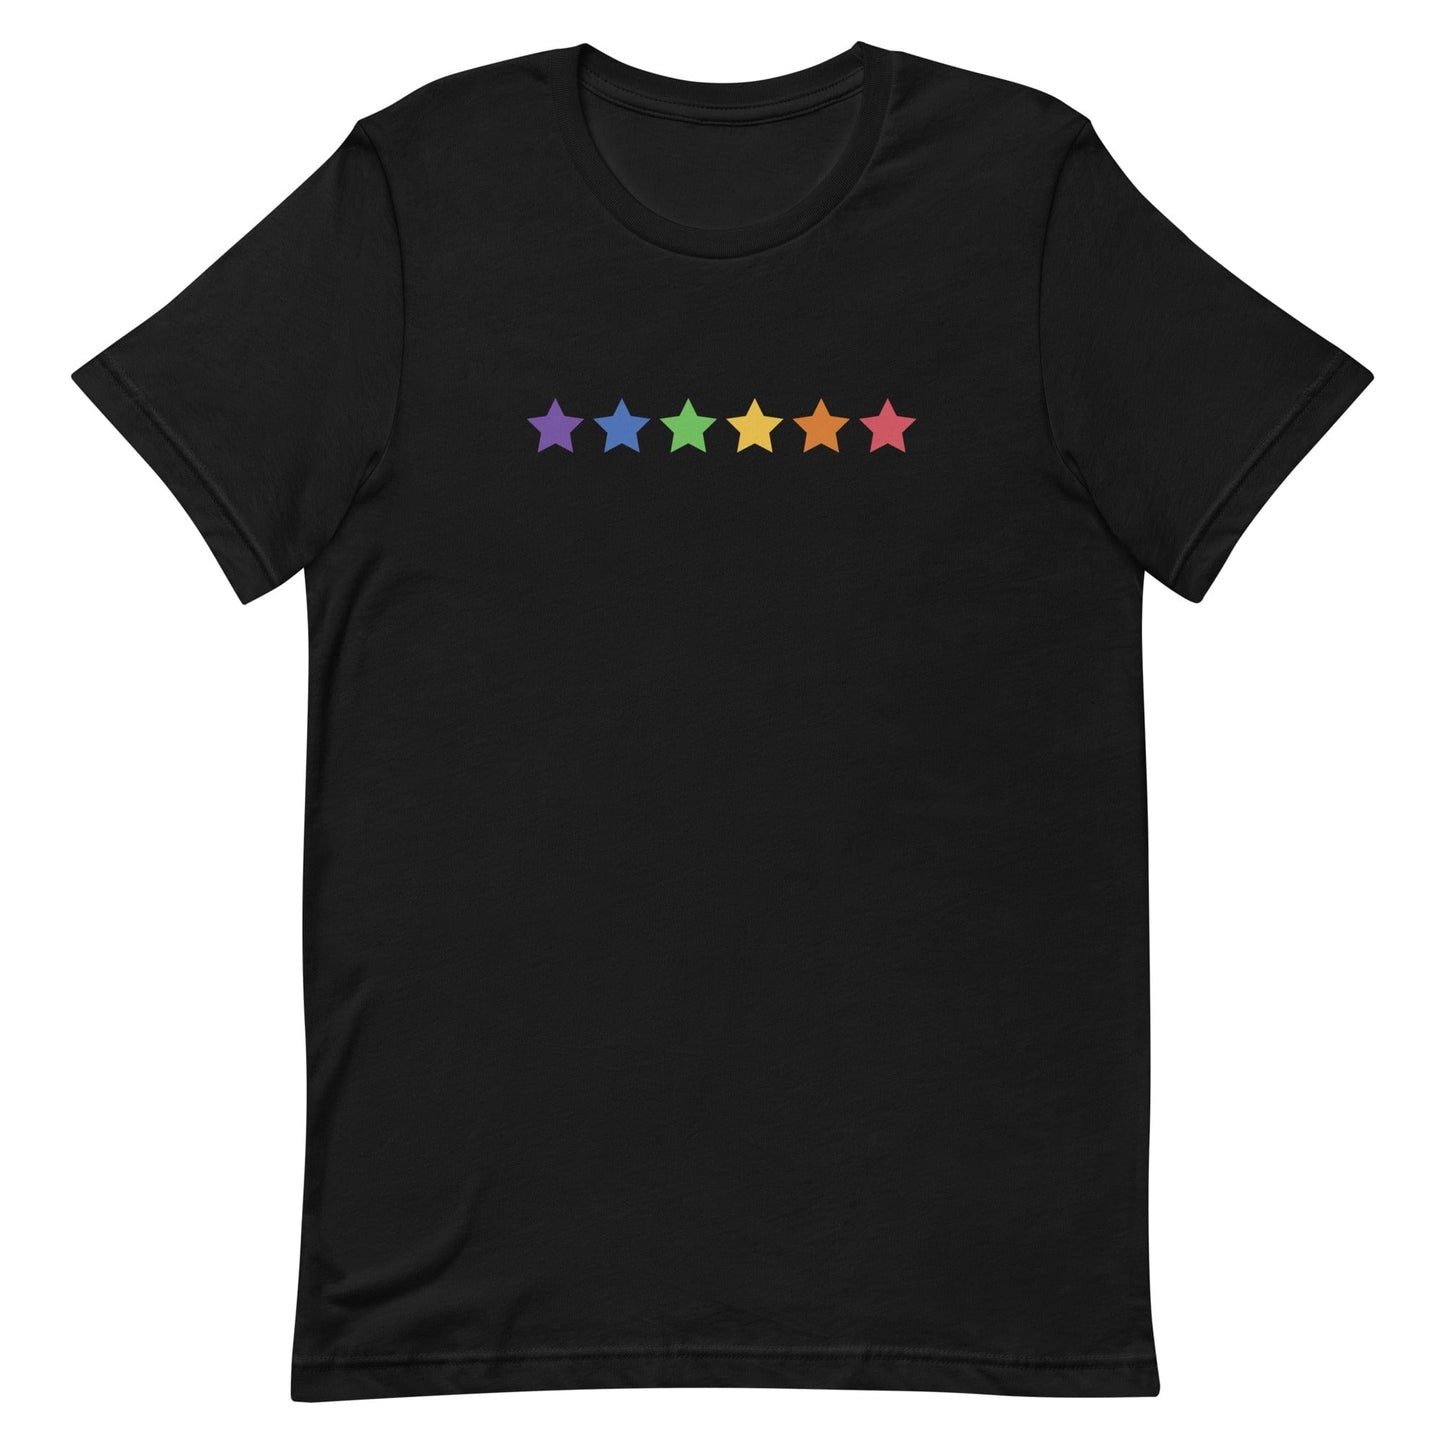 front-black-genderless-stars-pride-t-shirt-by-feminist-define